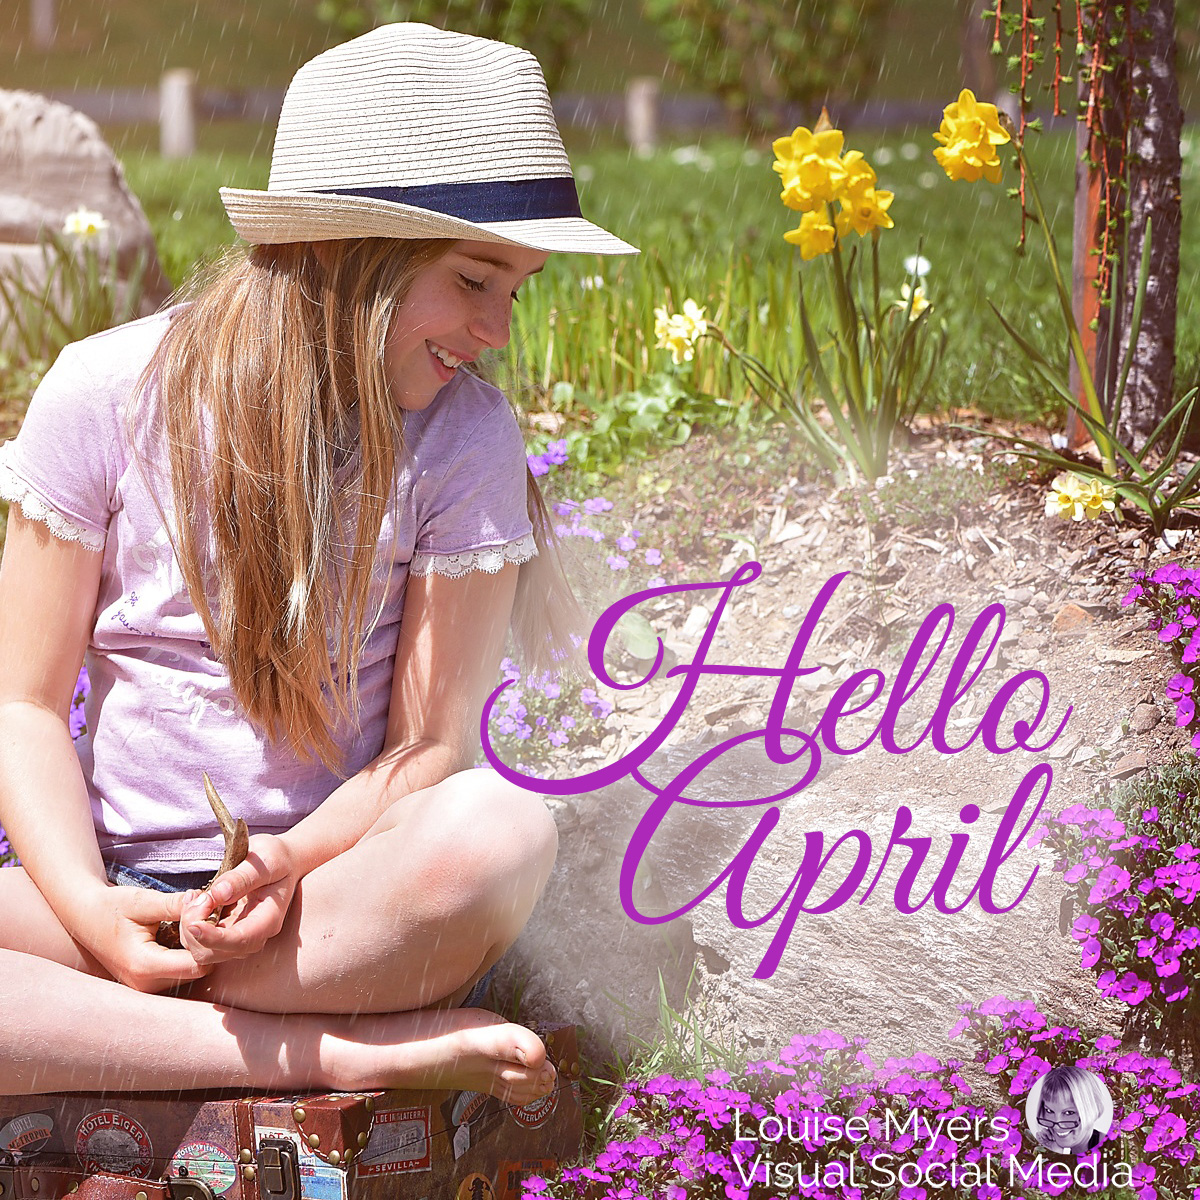 girl sitting in sunny flower garden says hello april.